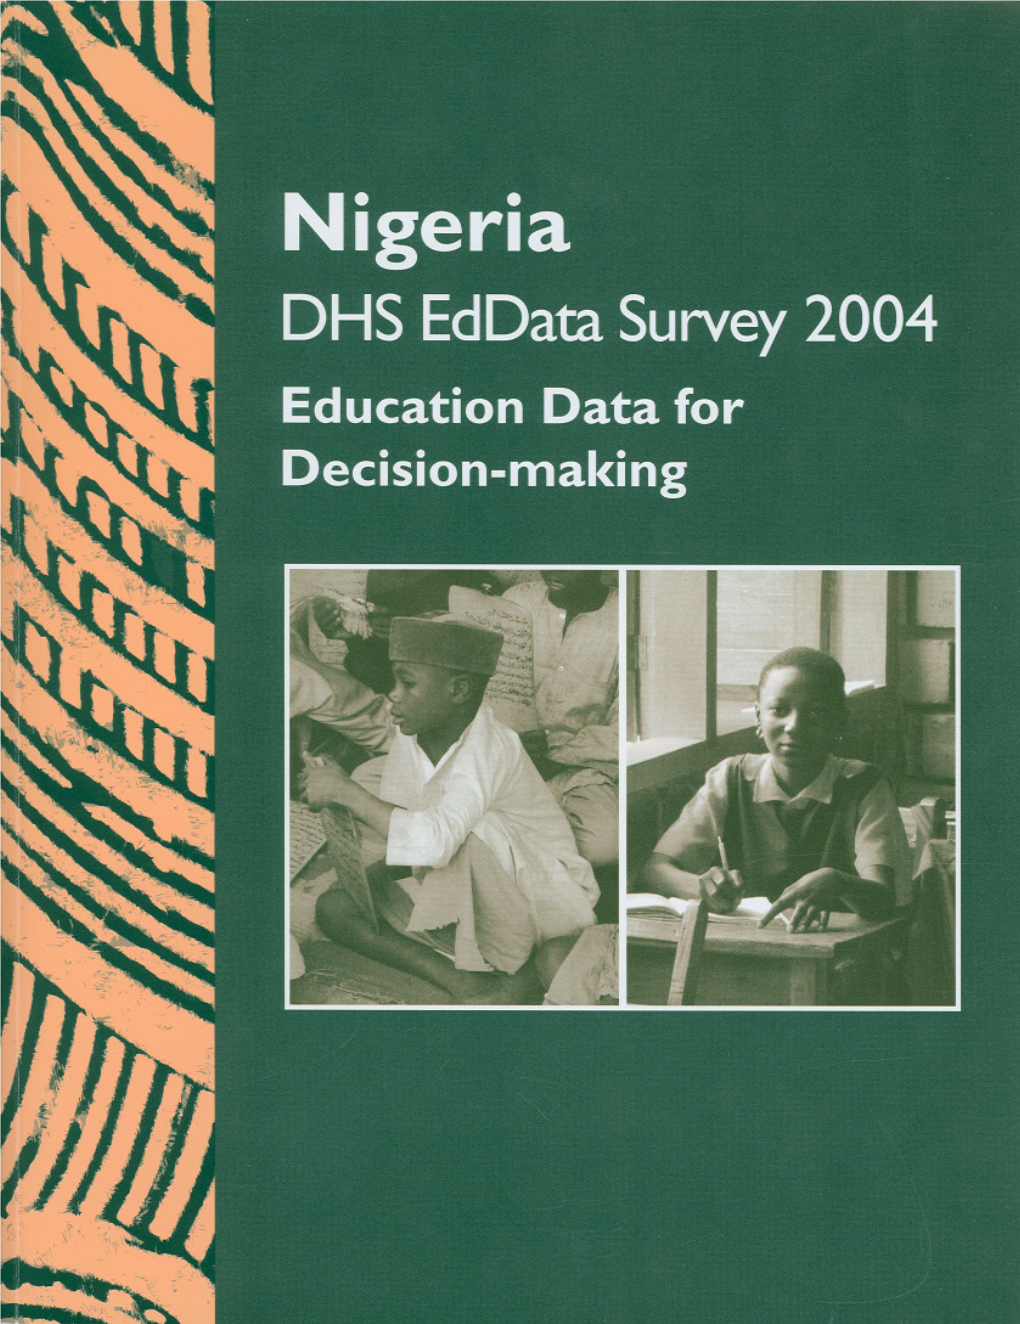 Nigeria DHS Eddata Survey 2004